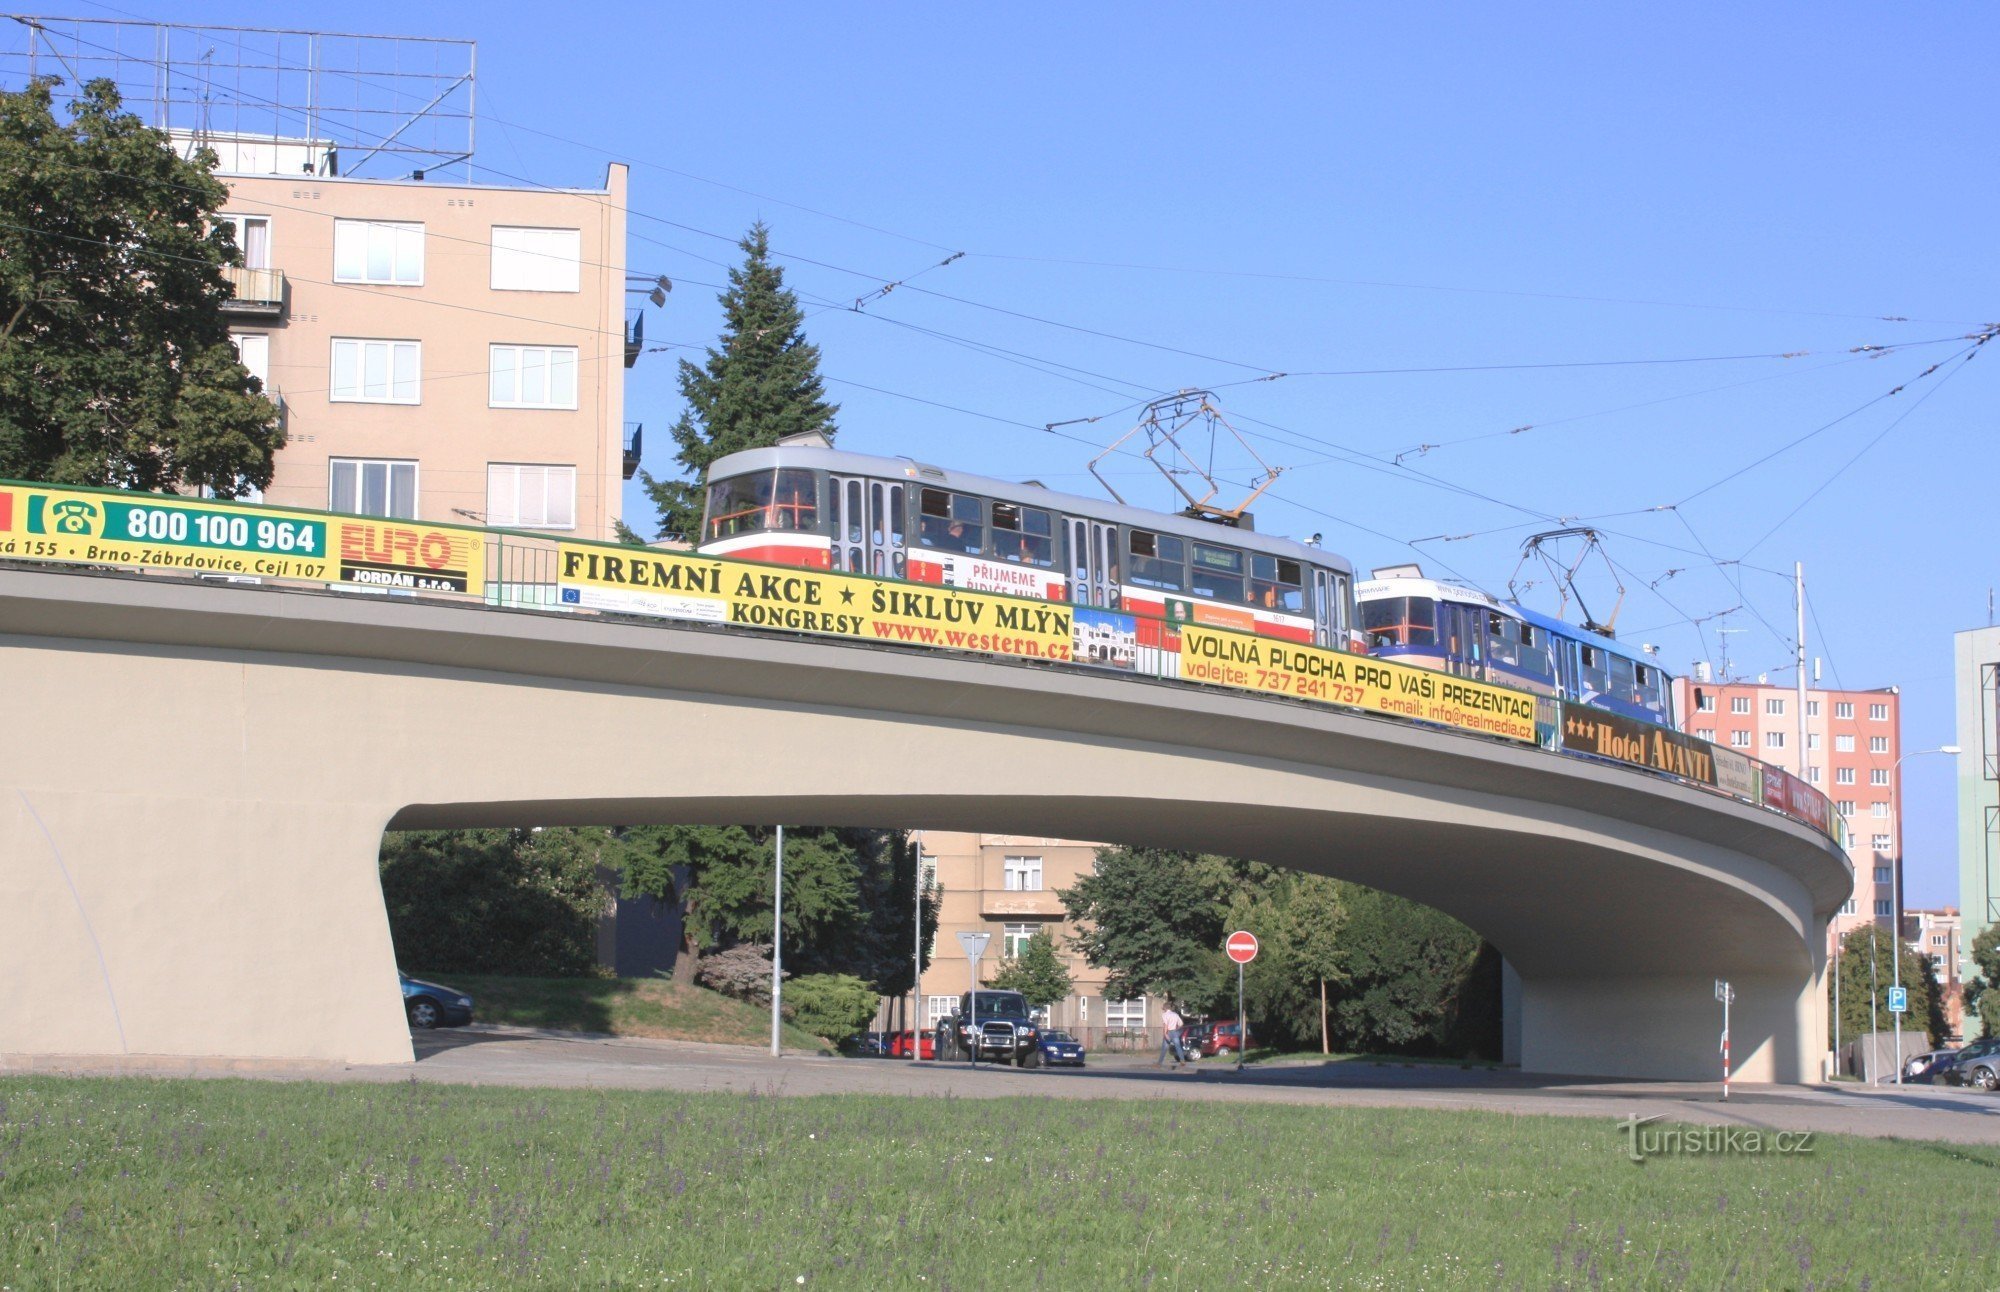 Brno-Pisárky - cầu xe điện